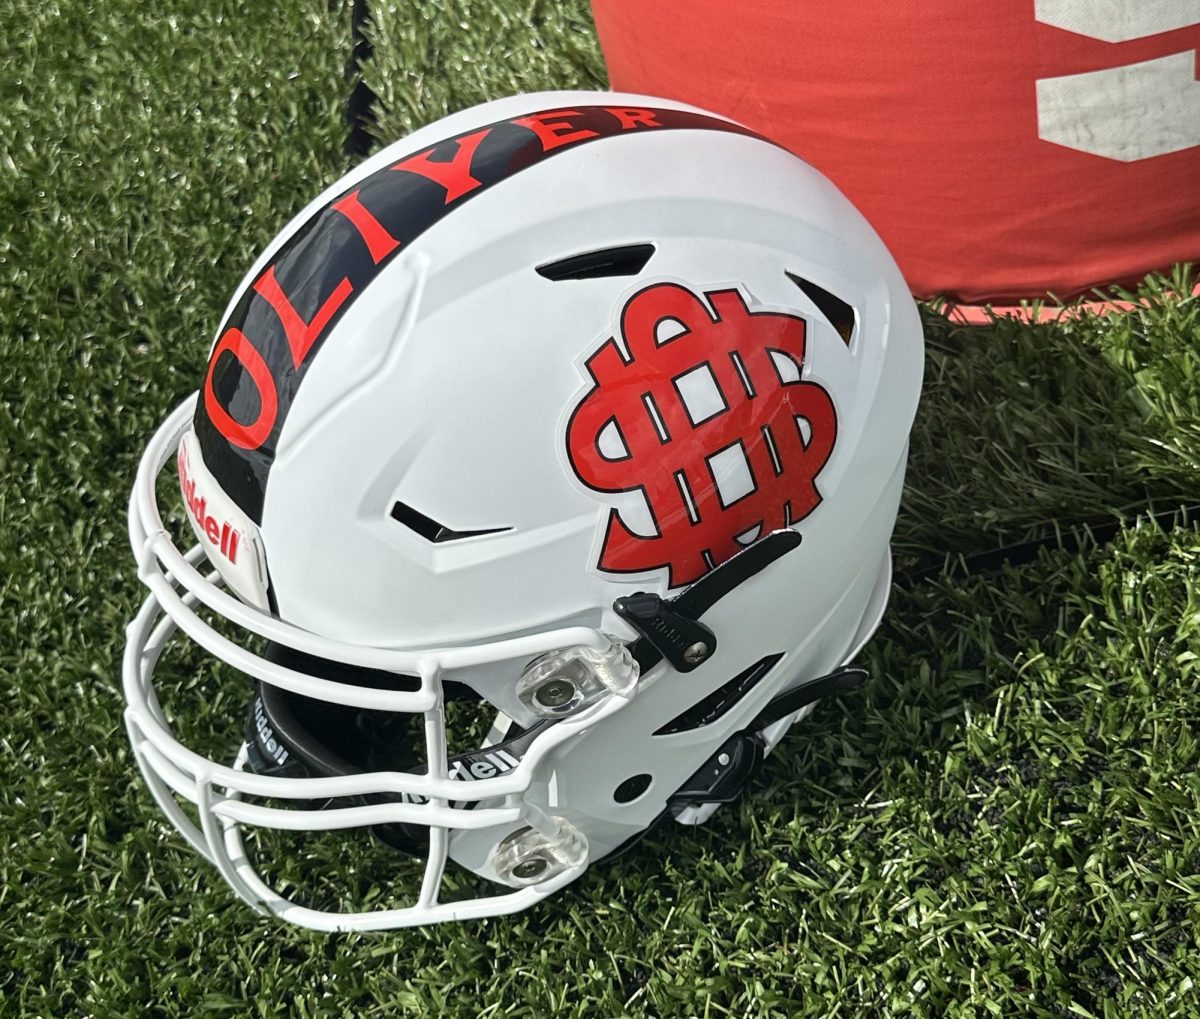 GRCs new football helmets honor Clark Countys Oliver School.